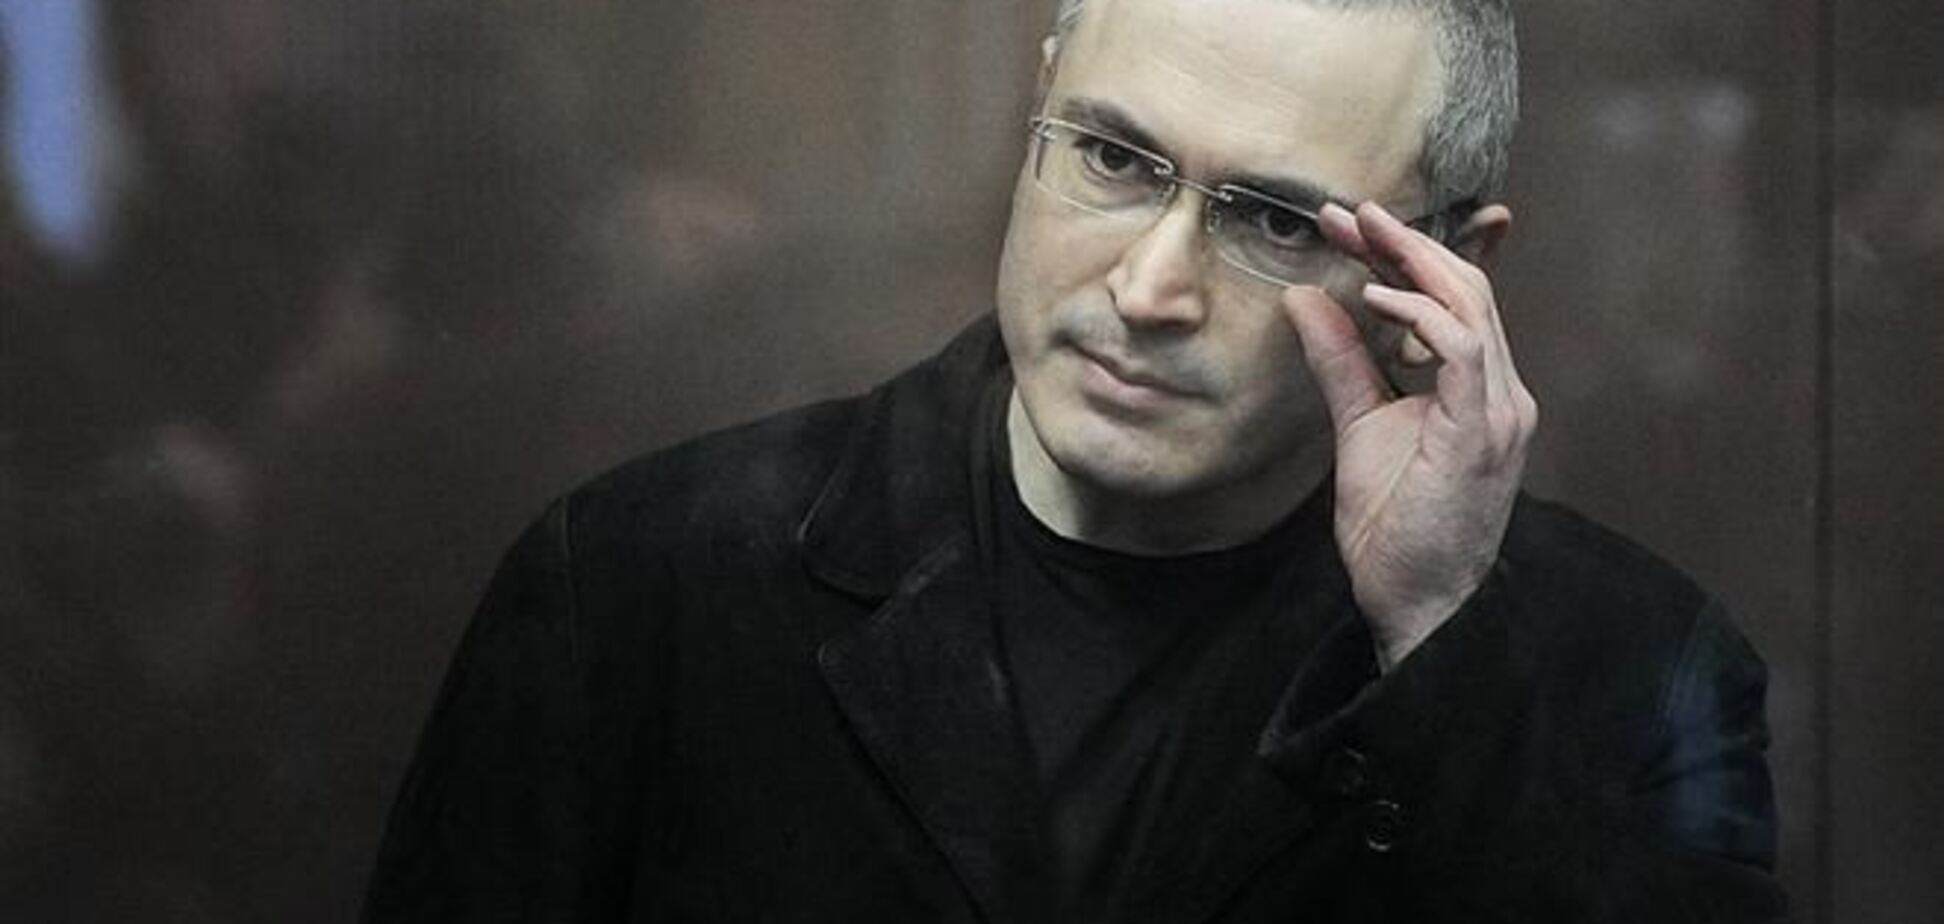 Путин помилует Ходорковского